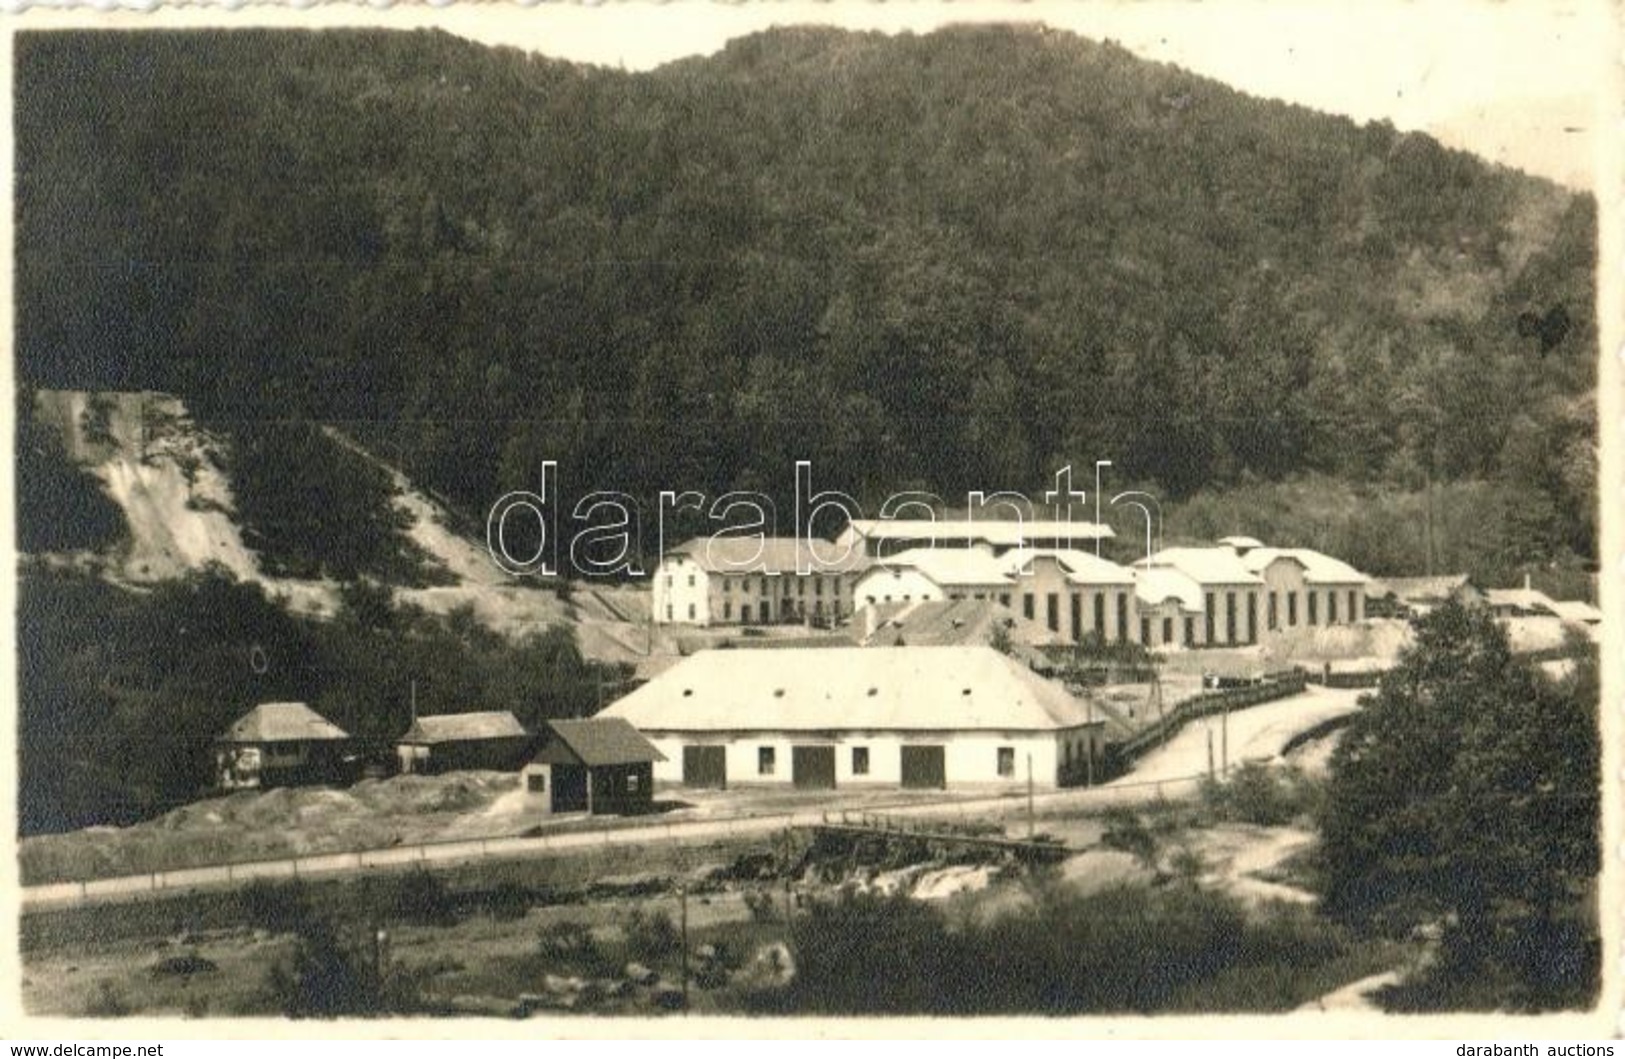 T2 1942 Felsőbánya, Baia Sprie; Zúzda / Crushing Mills. Photo - Non Classés